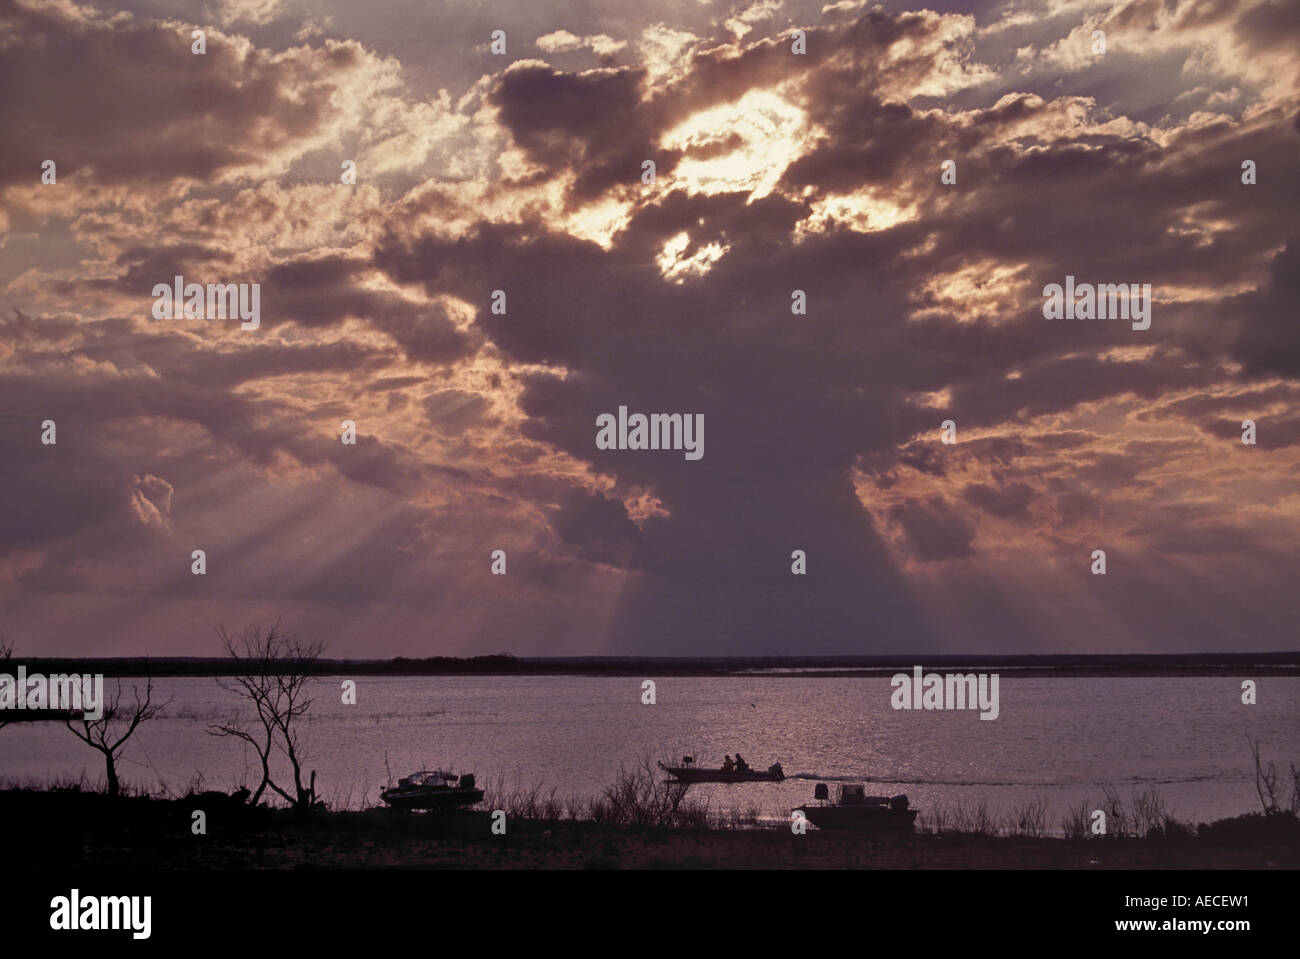 Boats, people at sunset at Calliham Unit of Choke Canyon Reservoir, Texas, USA Stock Photo